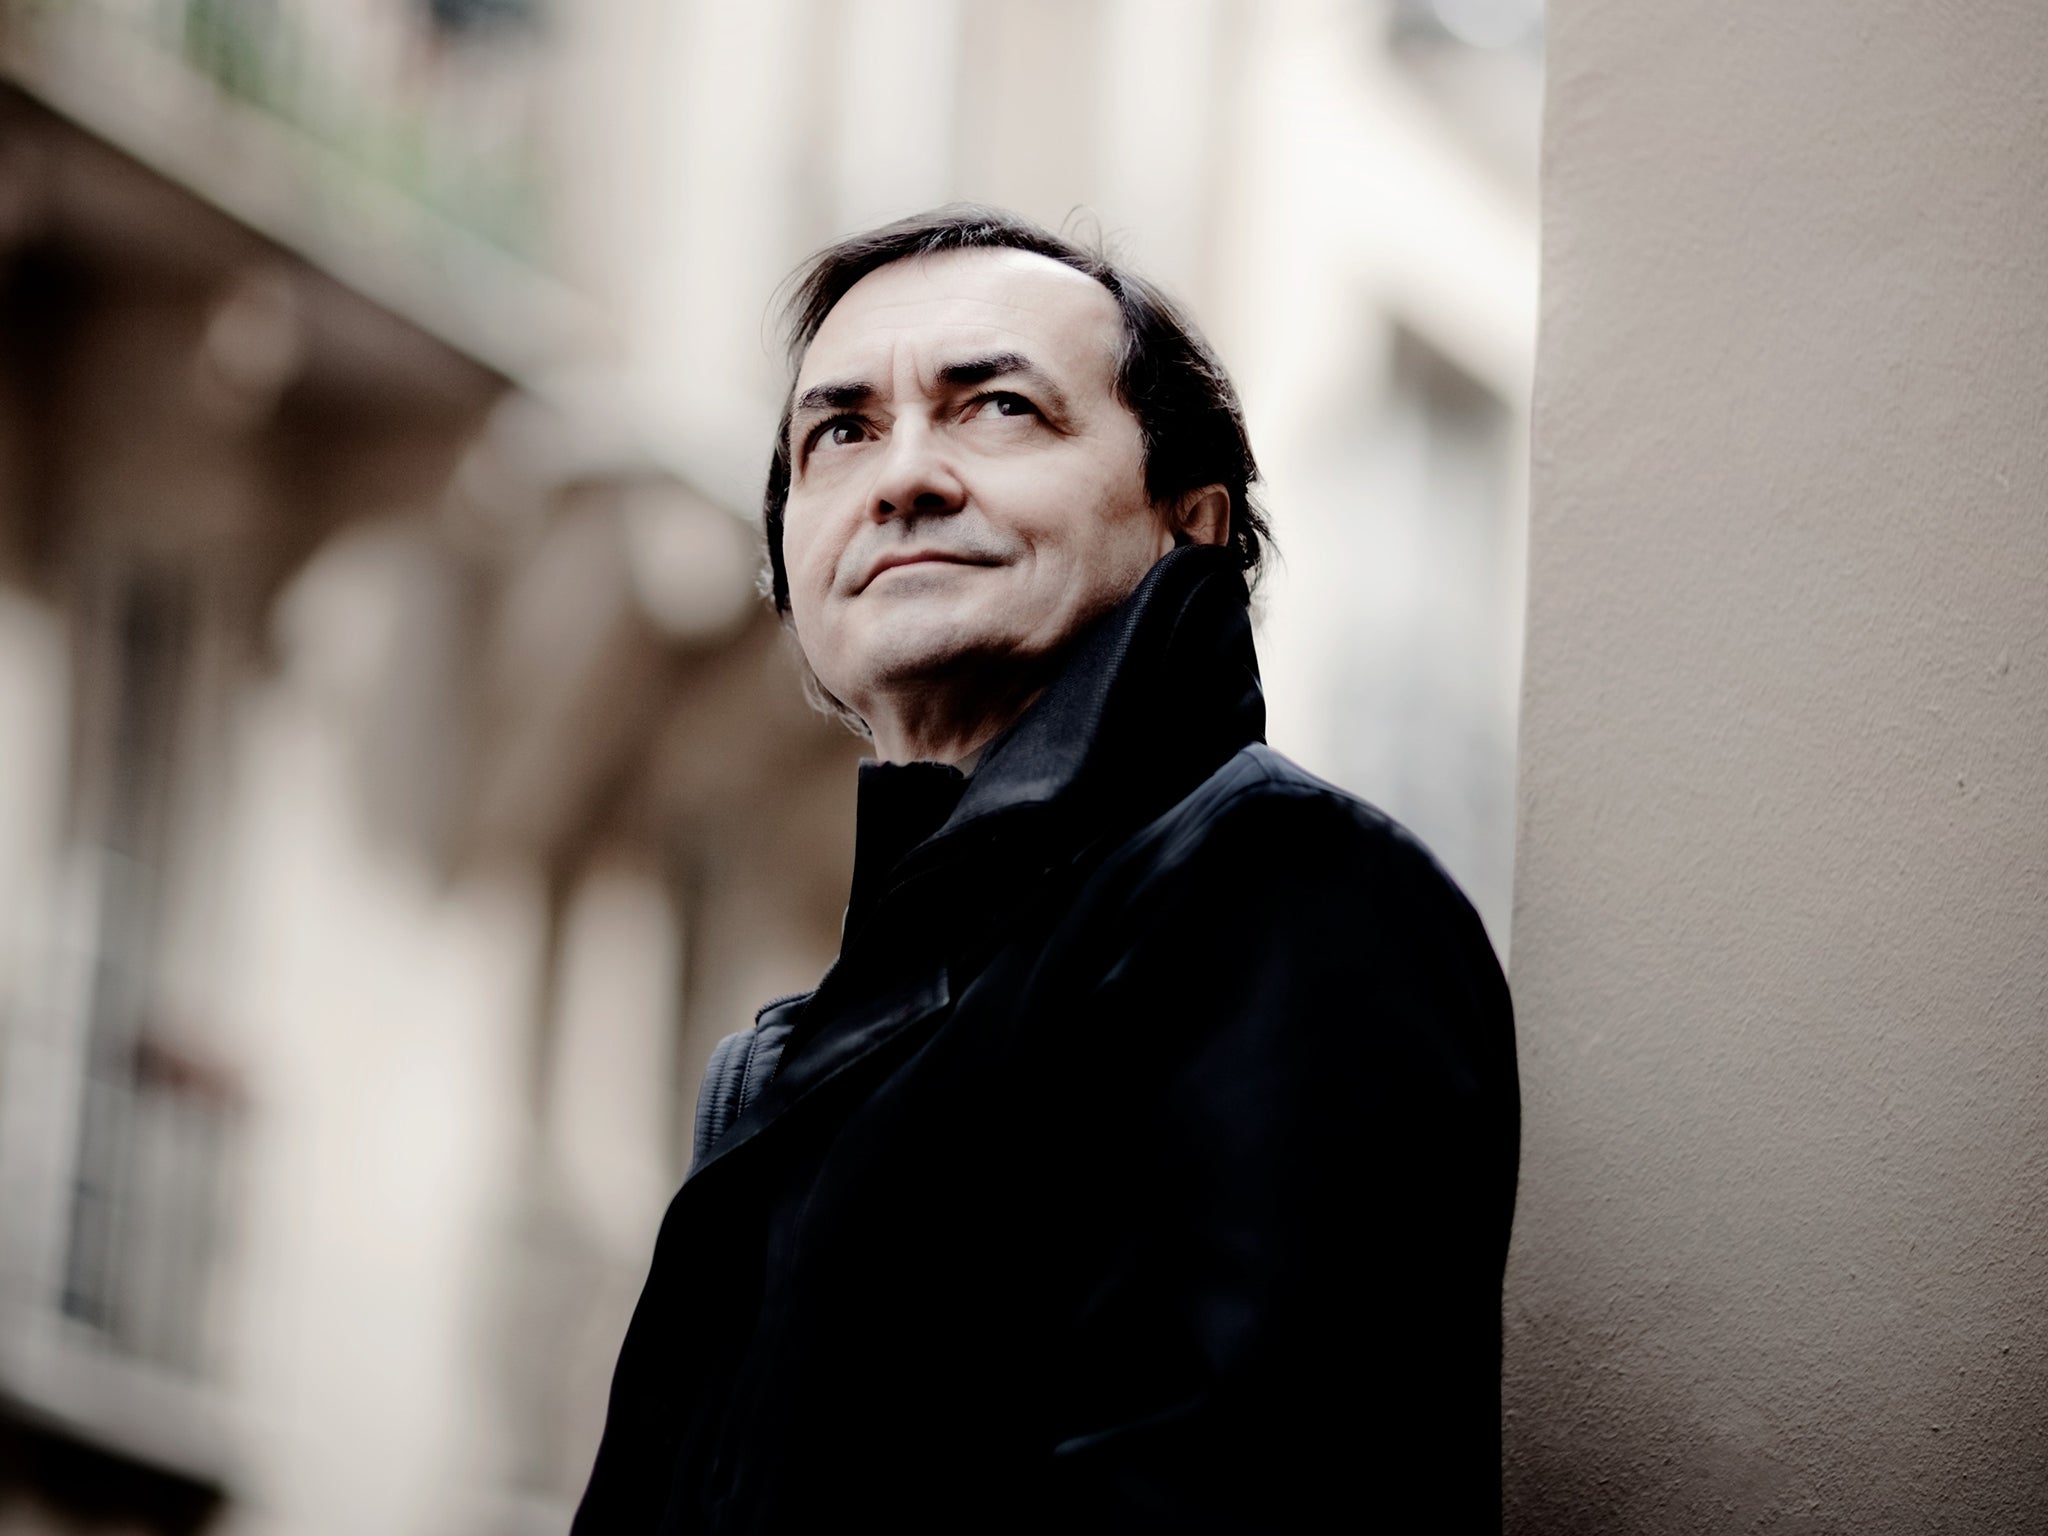 Composer Pierre-Laurent Aimard